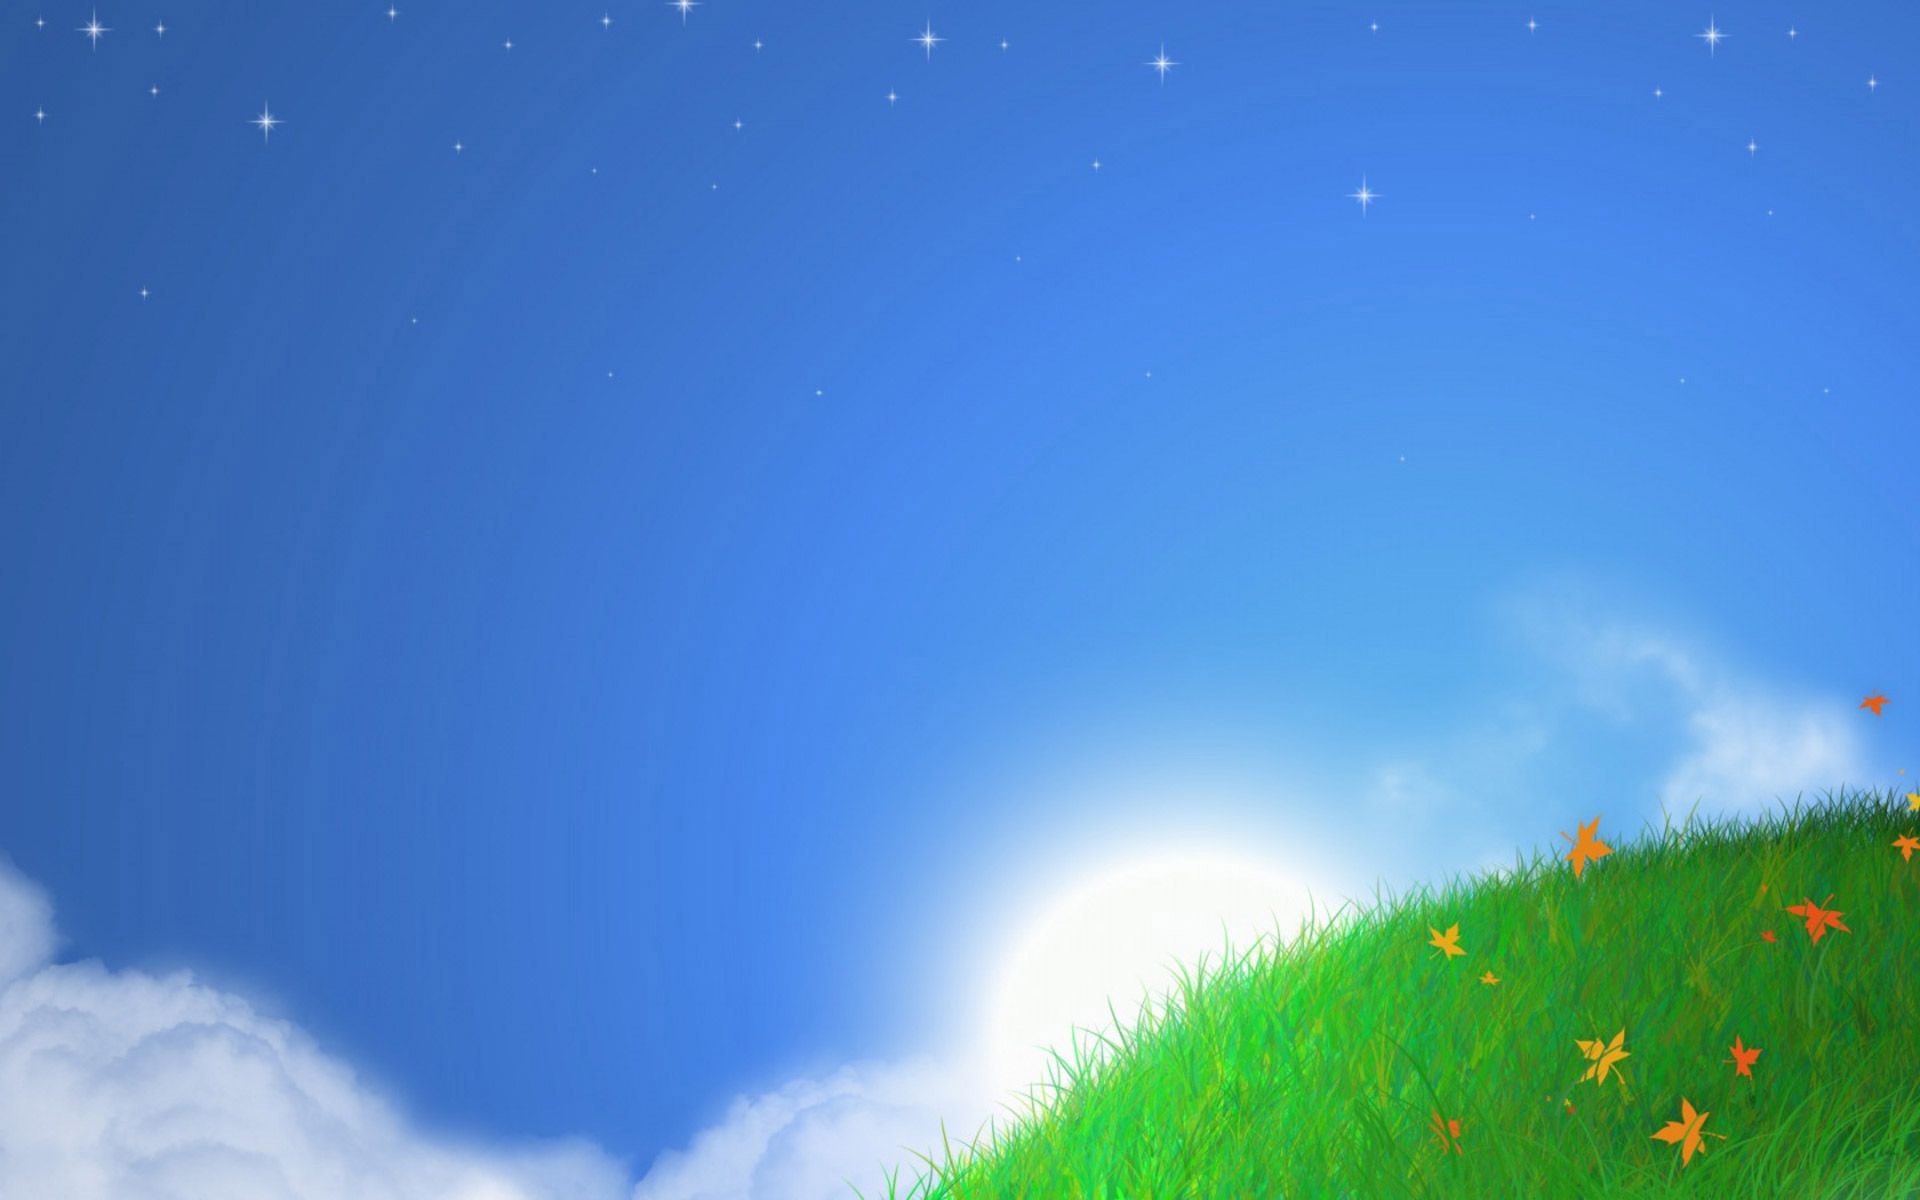 Windows 7 Theme summer meadow Free Background